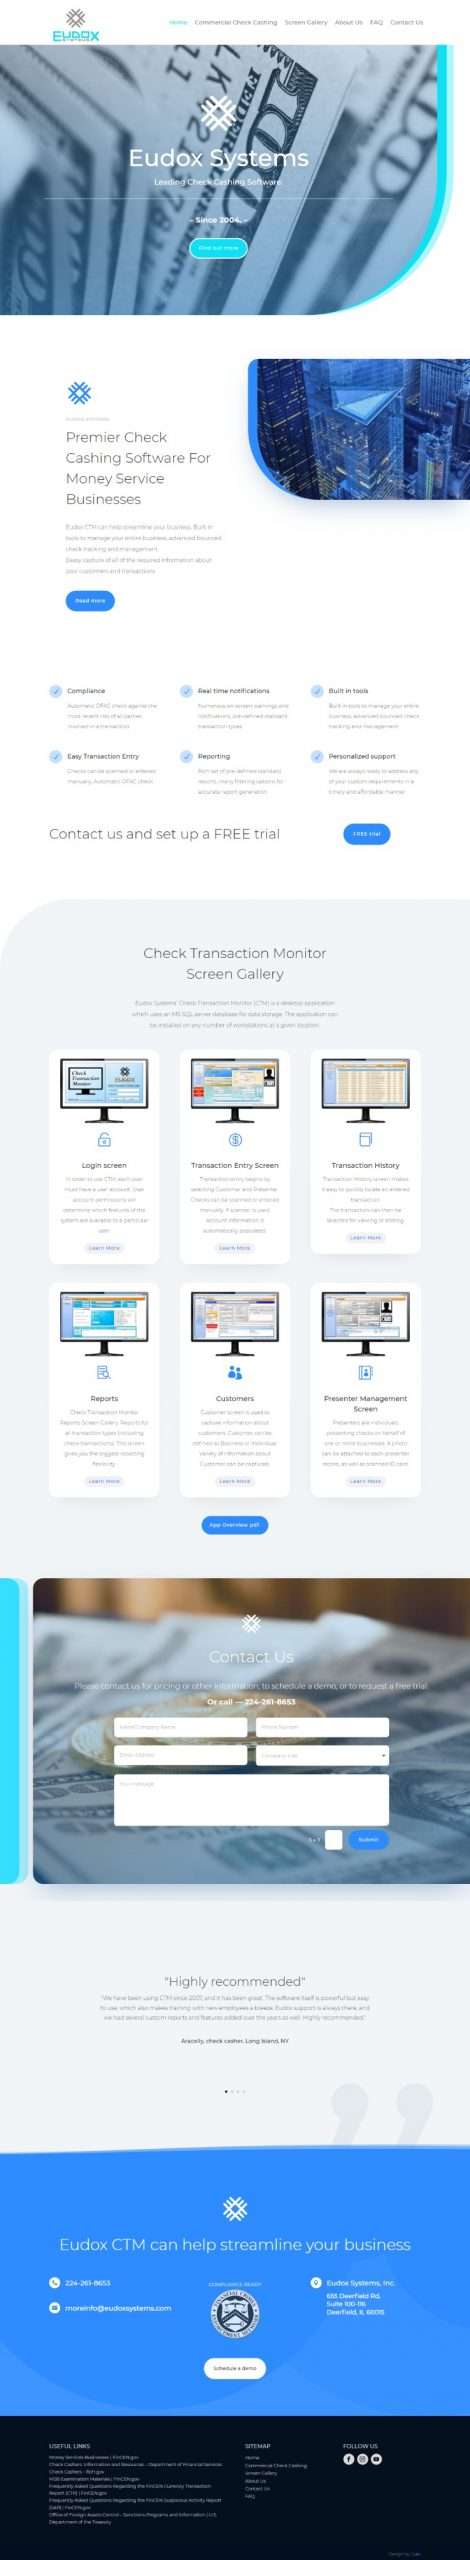 Meli web designer portfolio - software EduxSystems page